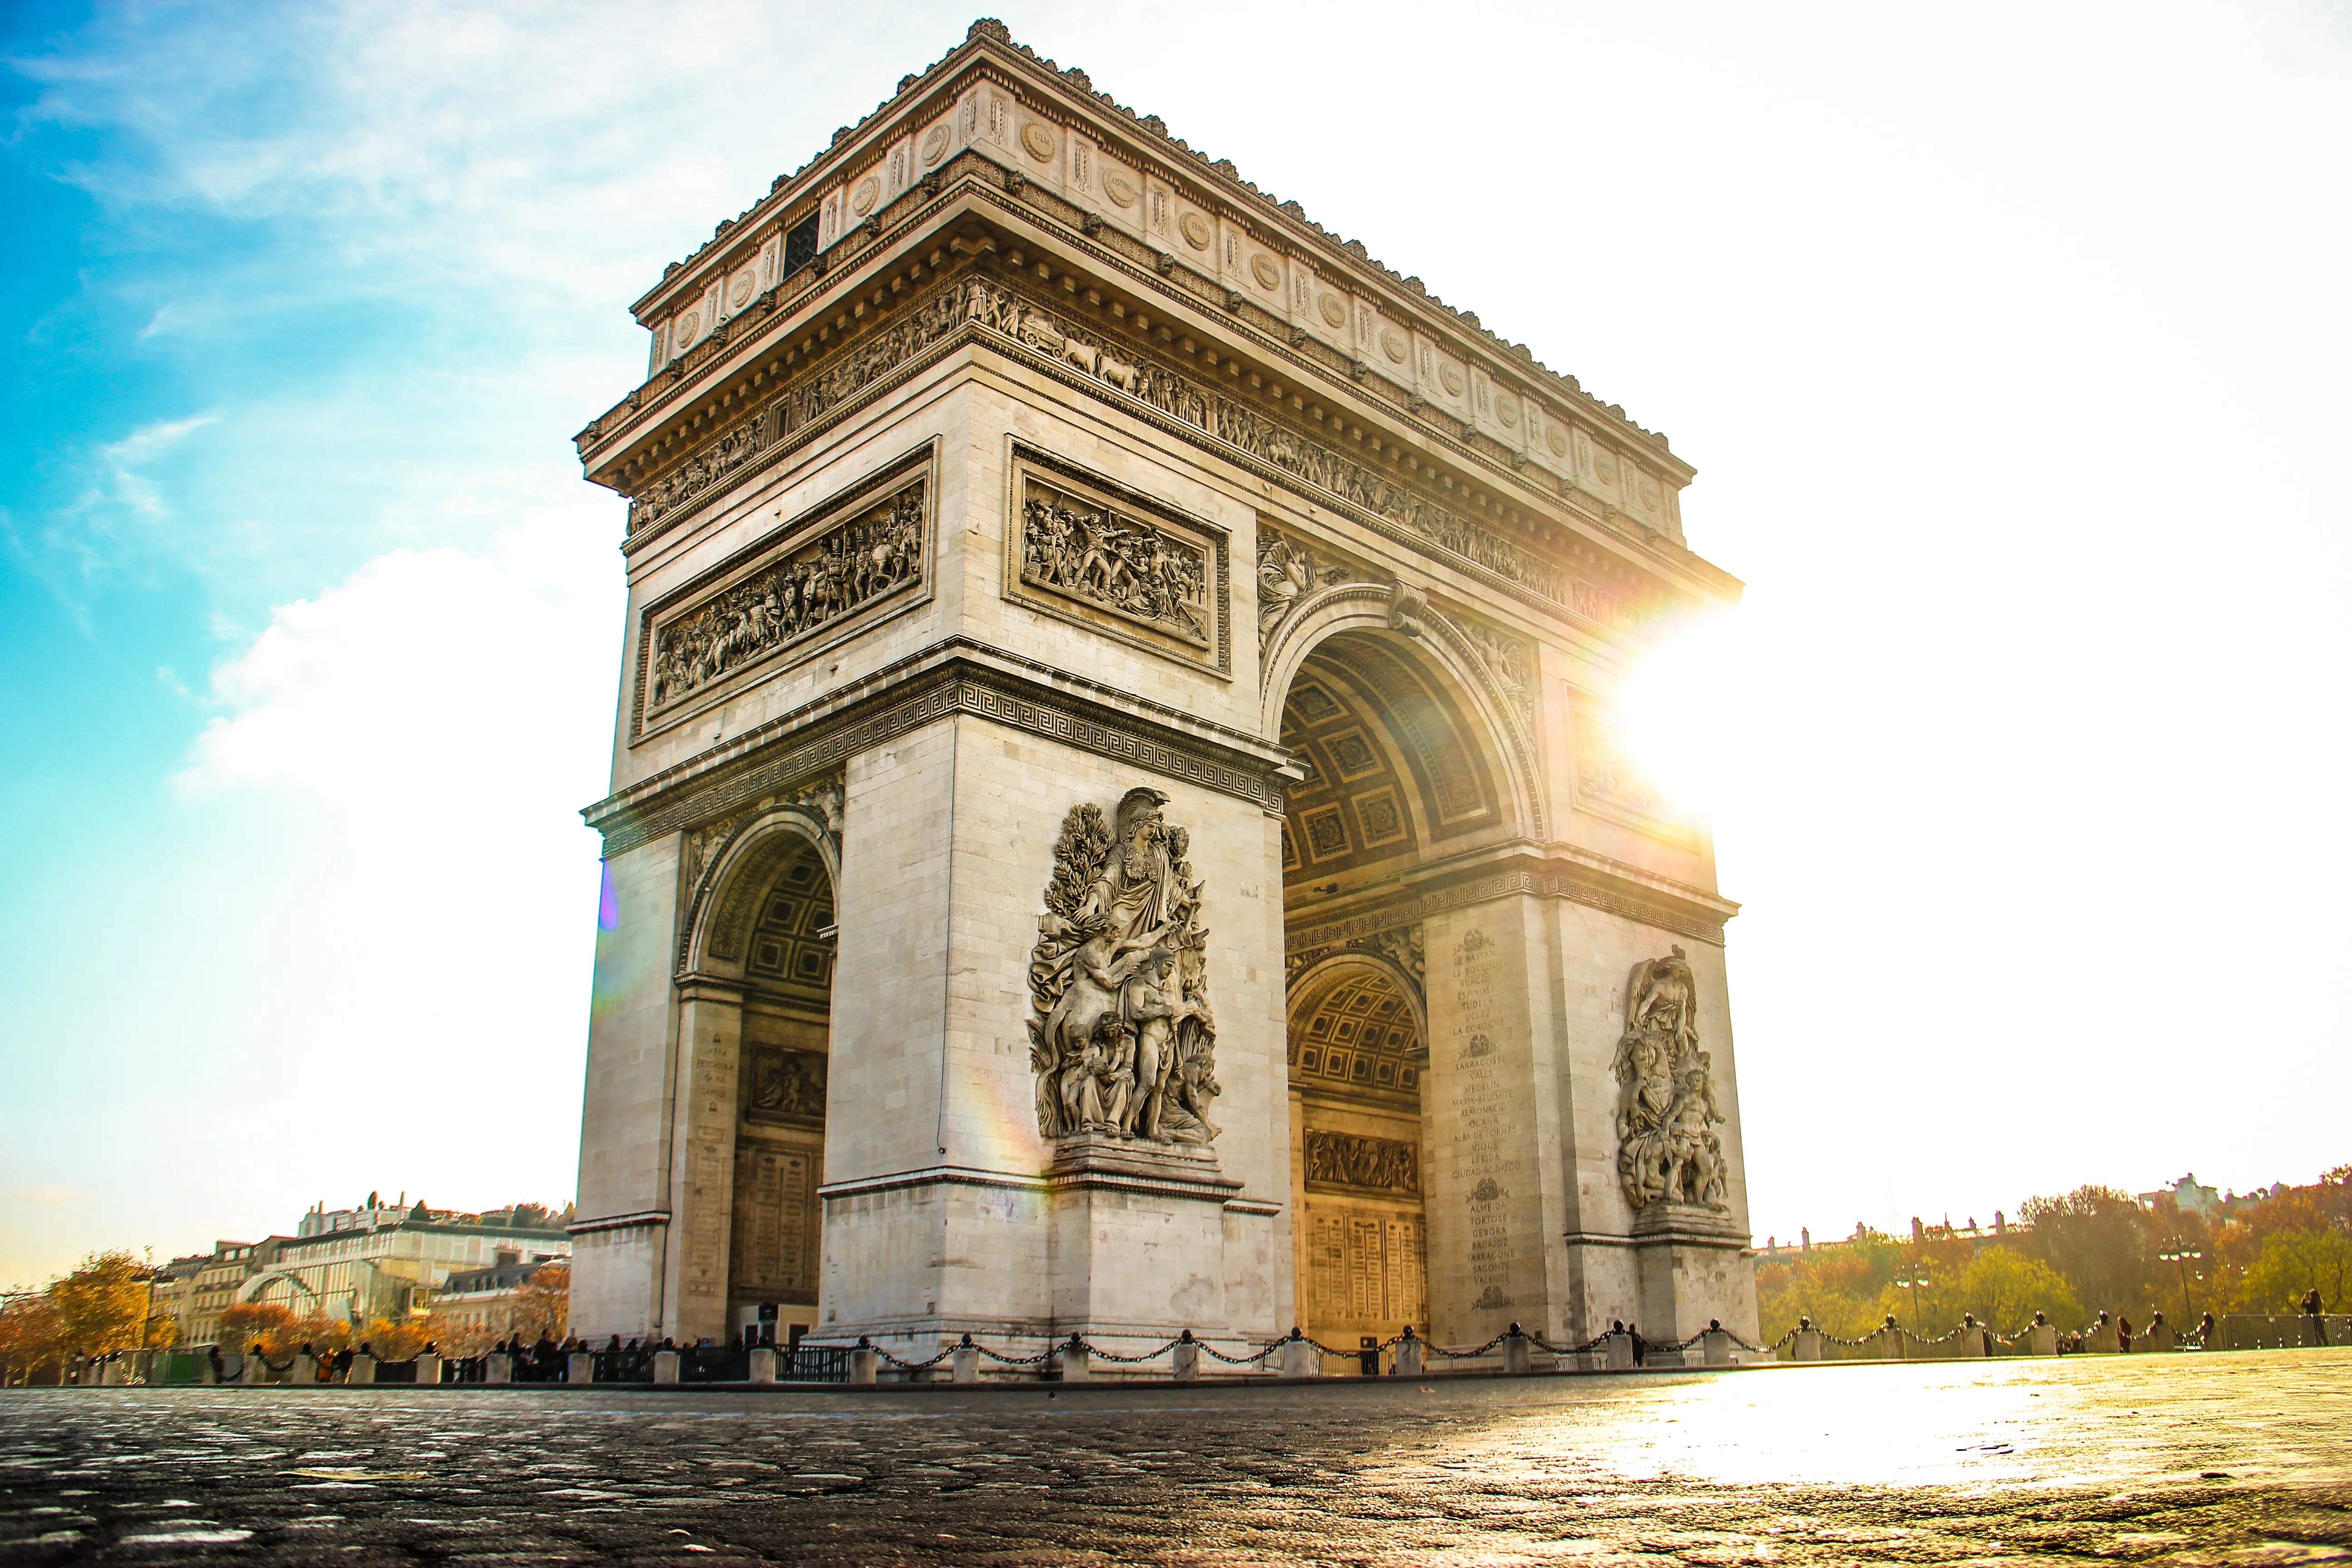 14 days in France: Arc de Triomphe